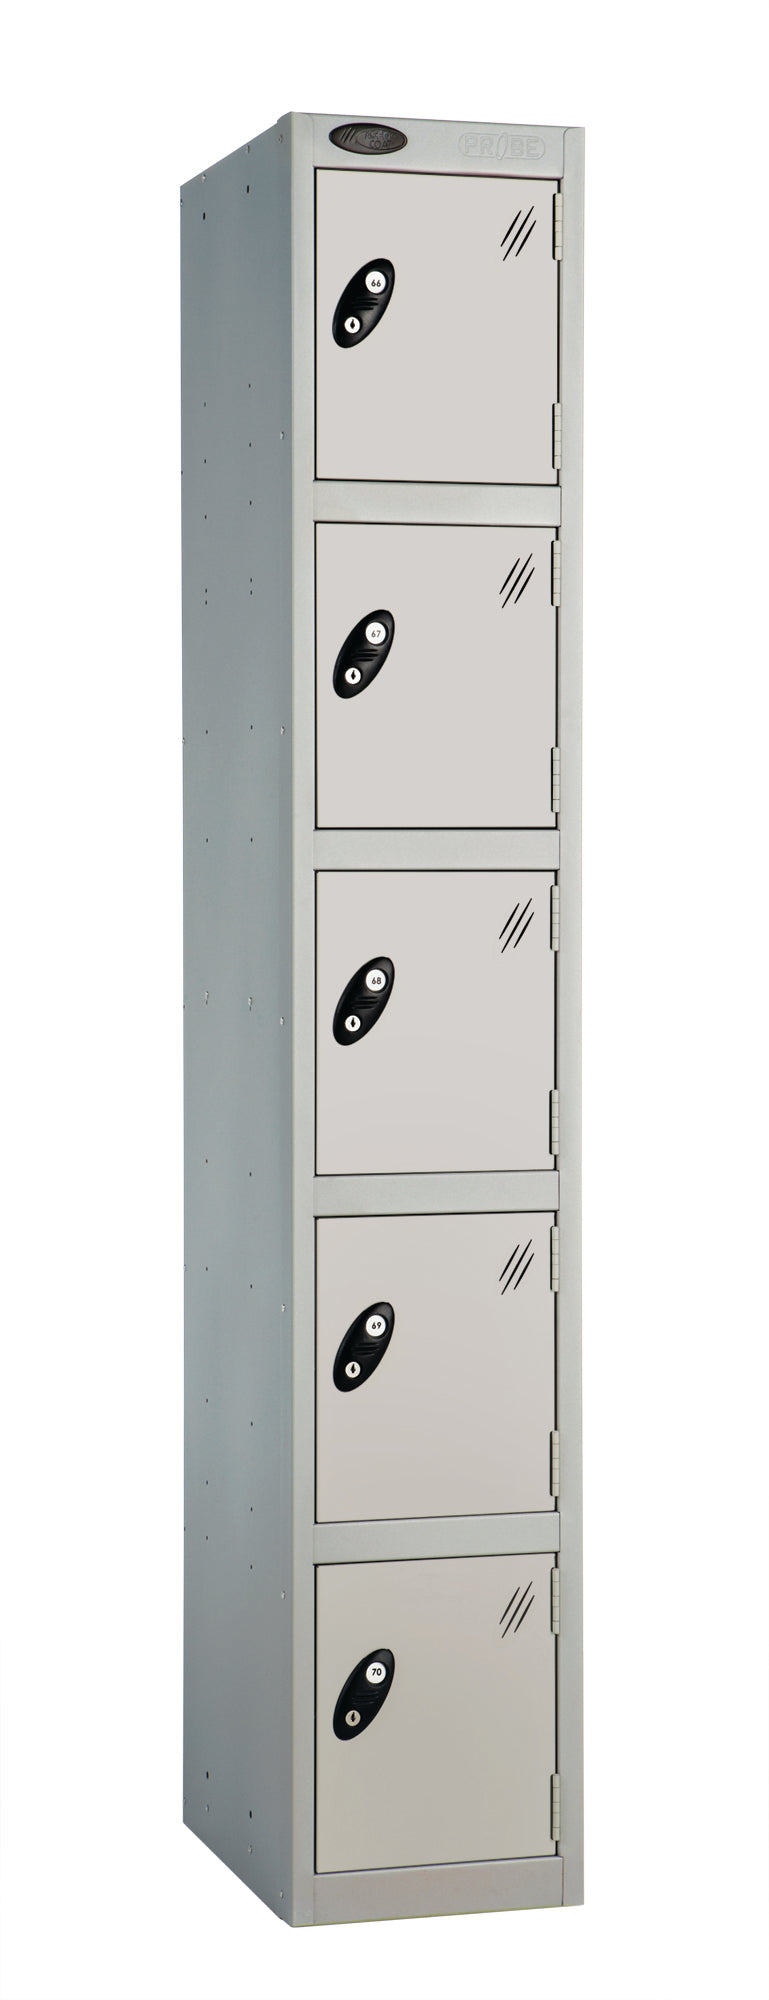 PROBEBOX STANDARD 1 NEST STEEL LOCKERS - DUST SILVER 5 DOOR Storage Lockers > Lockers > Cabinets > Storage > Probe > One Stop For Safety   